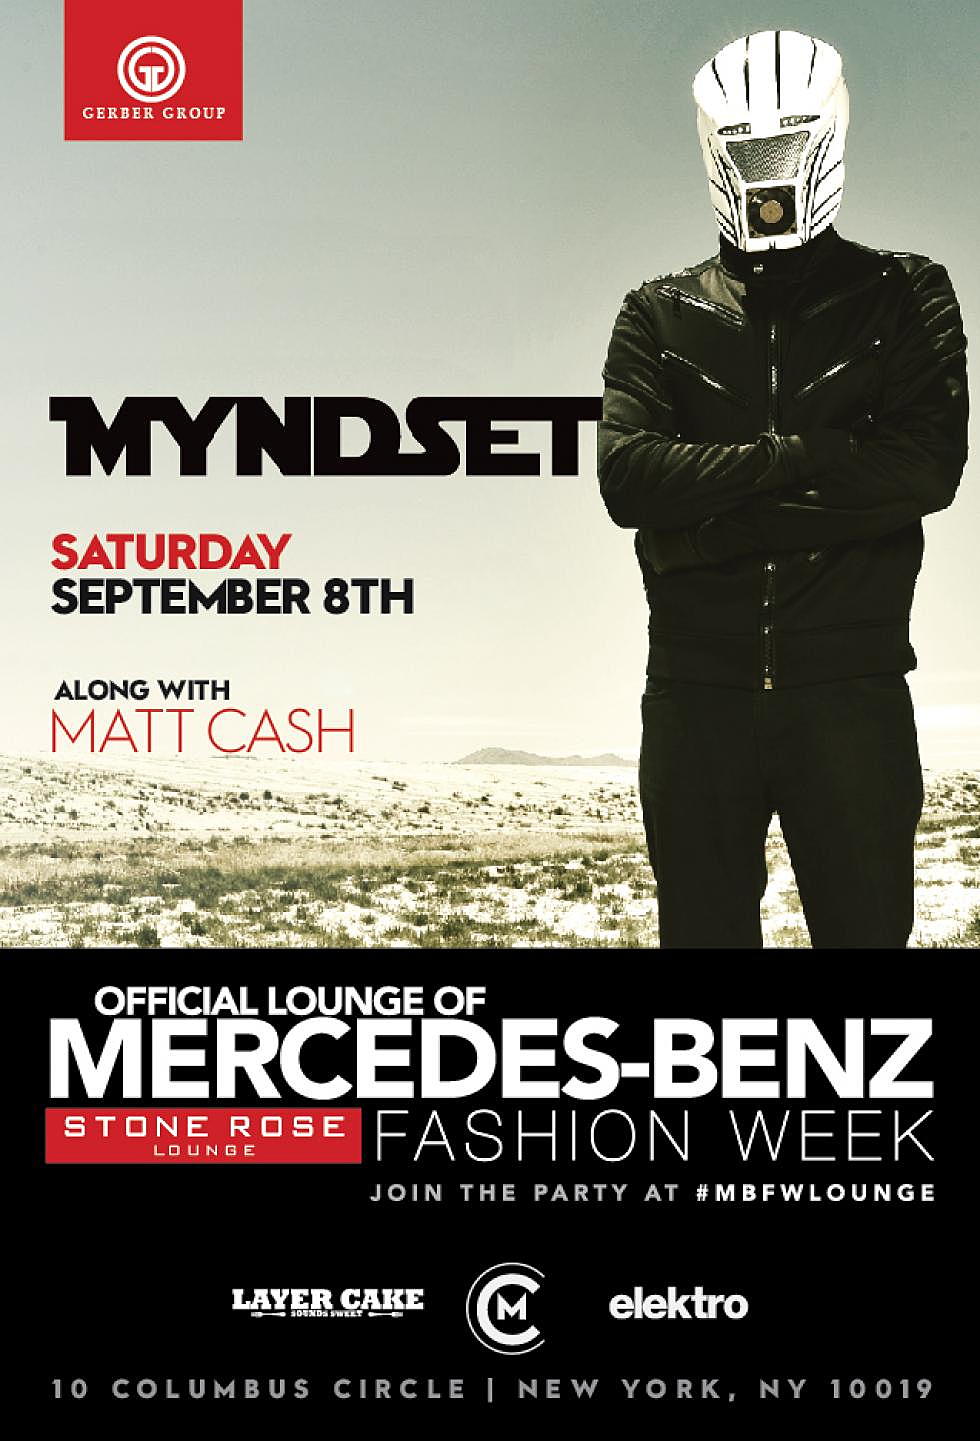 Quickie with a DJ Mercedes-Benz Fashion Week Edition: Myndset